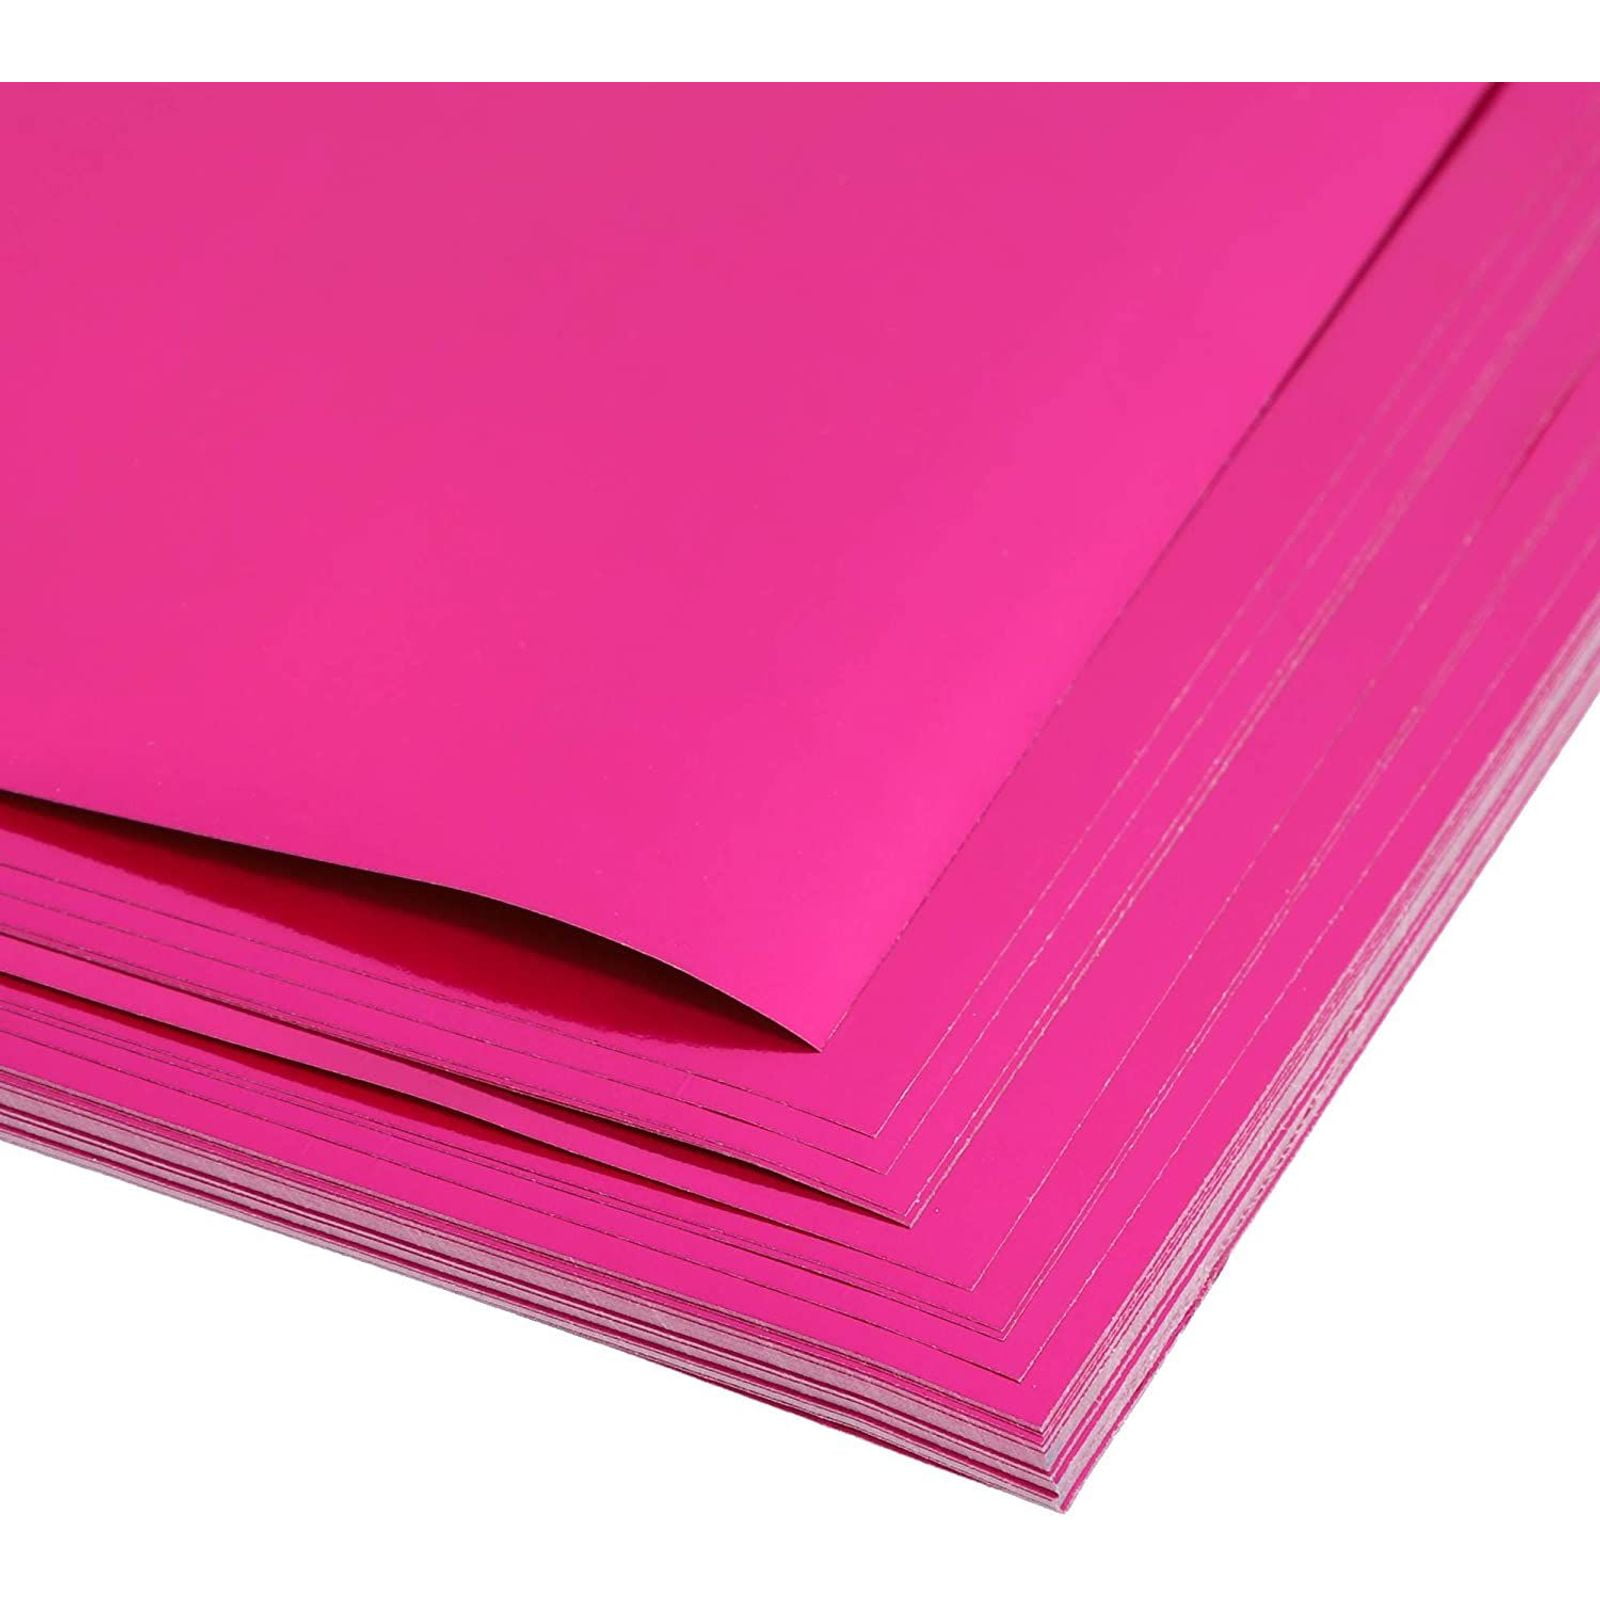 Sheets A4 Cardstock Pink Fushia 160g/m2 